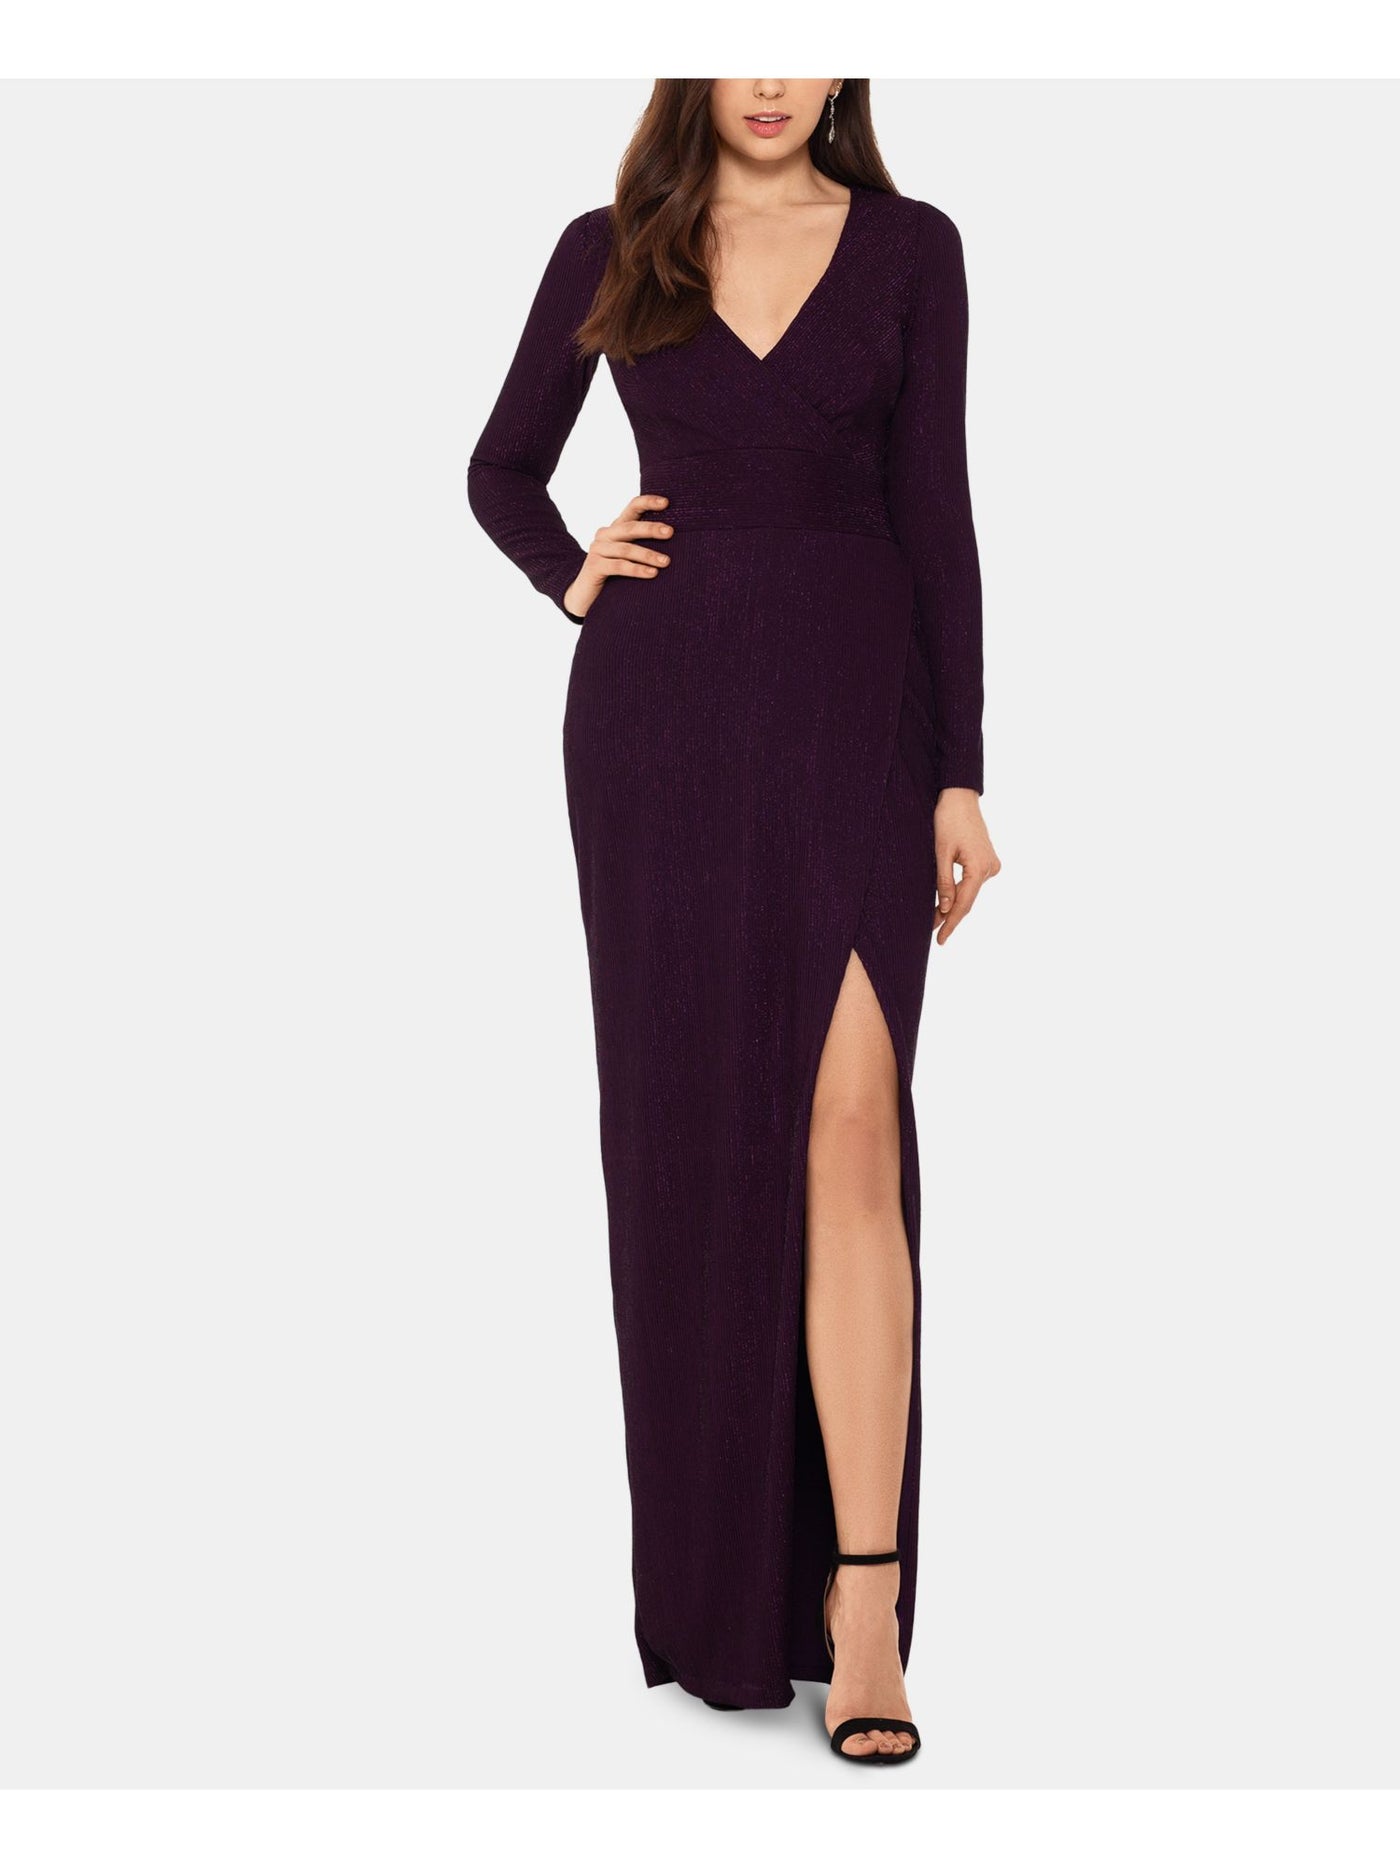 BETSY & ADAM Womens Purple Stretch Metallic Slitted Zippered Long Sleeve Surplice Neckline Full-Length Evening Gown Dress 6